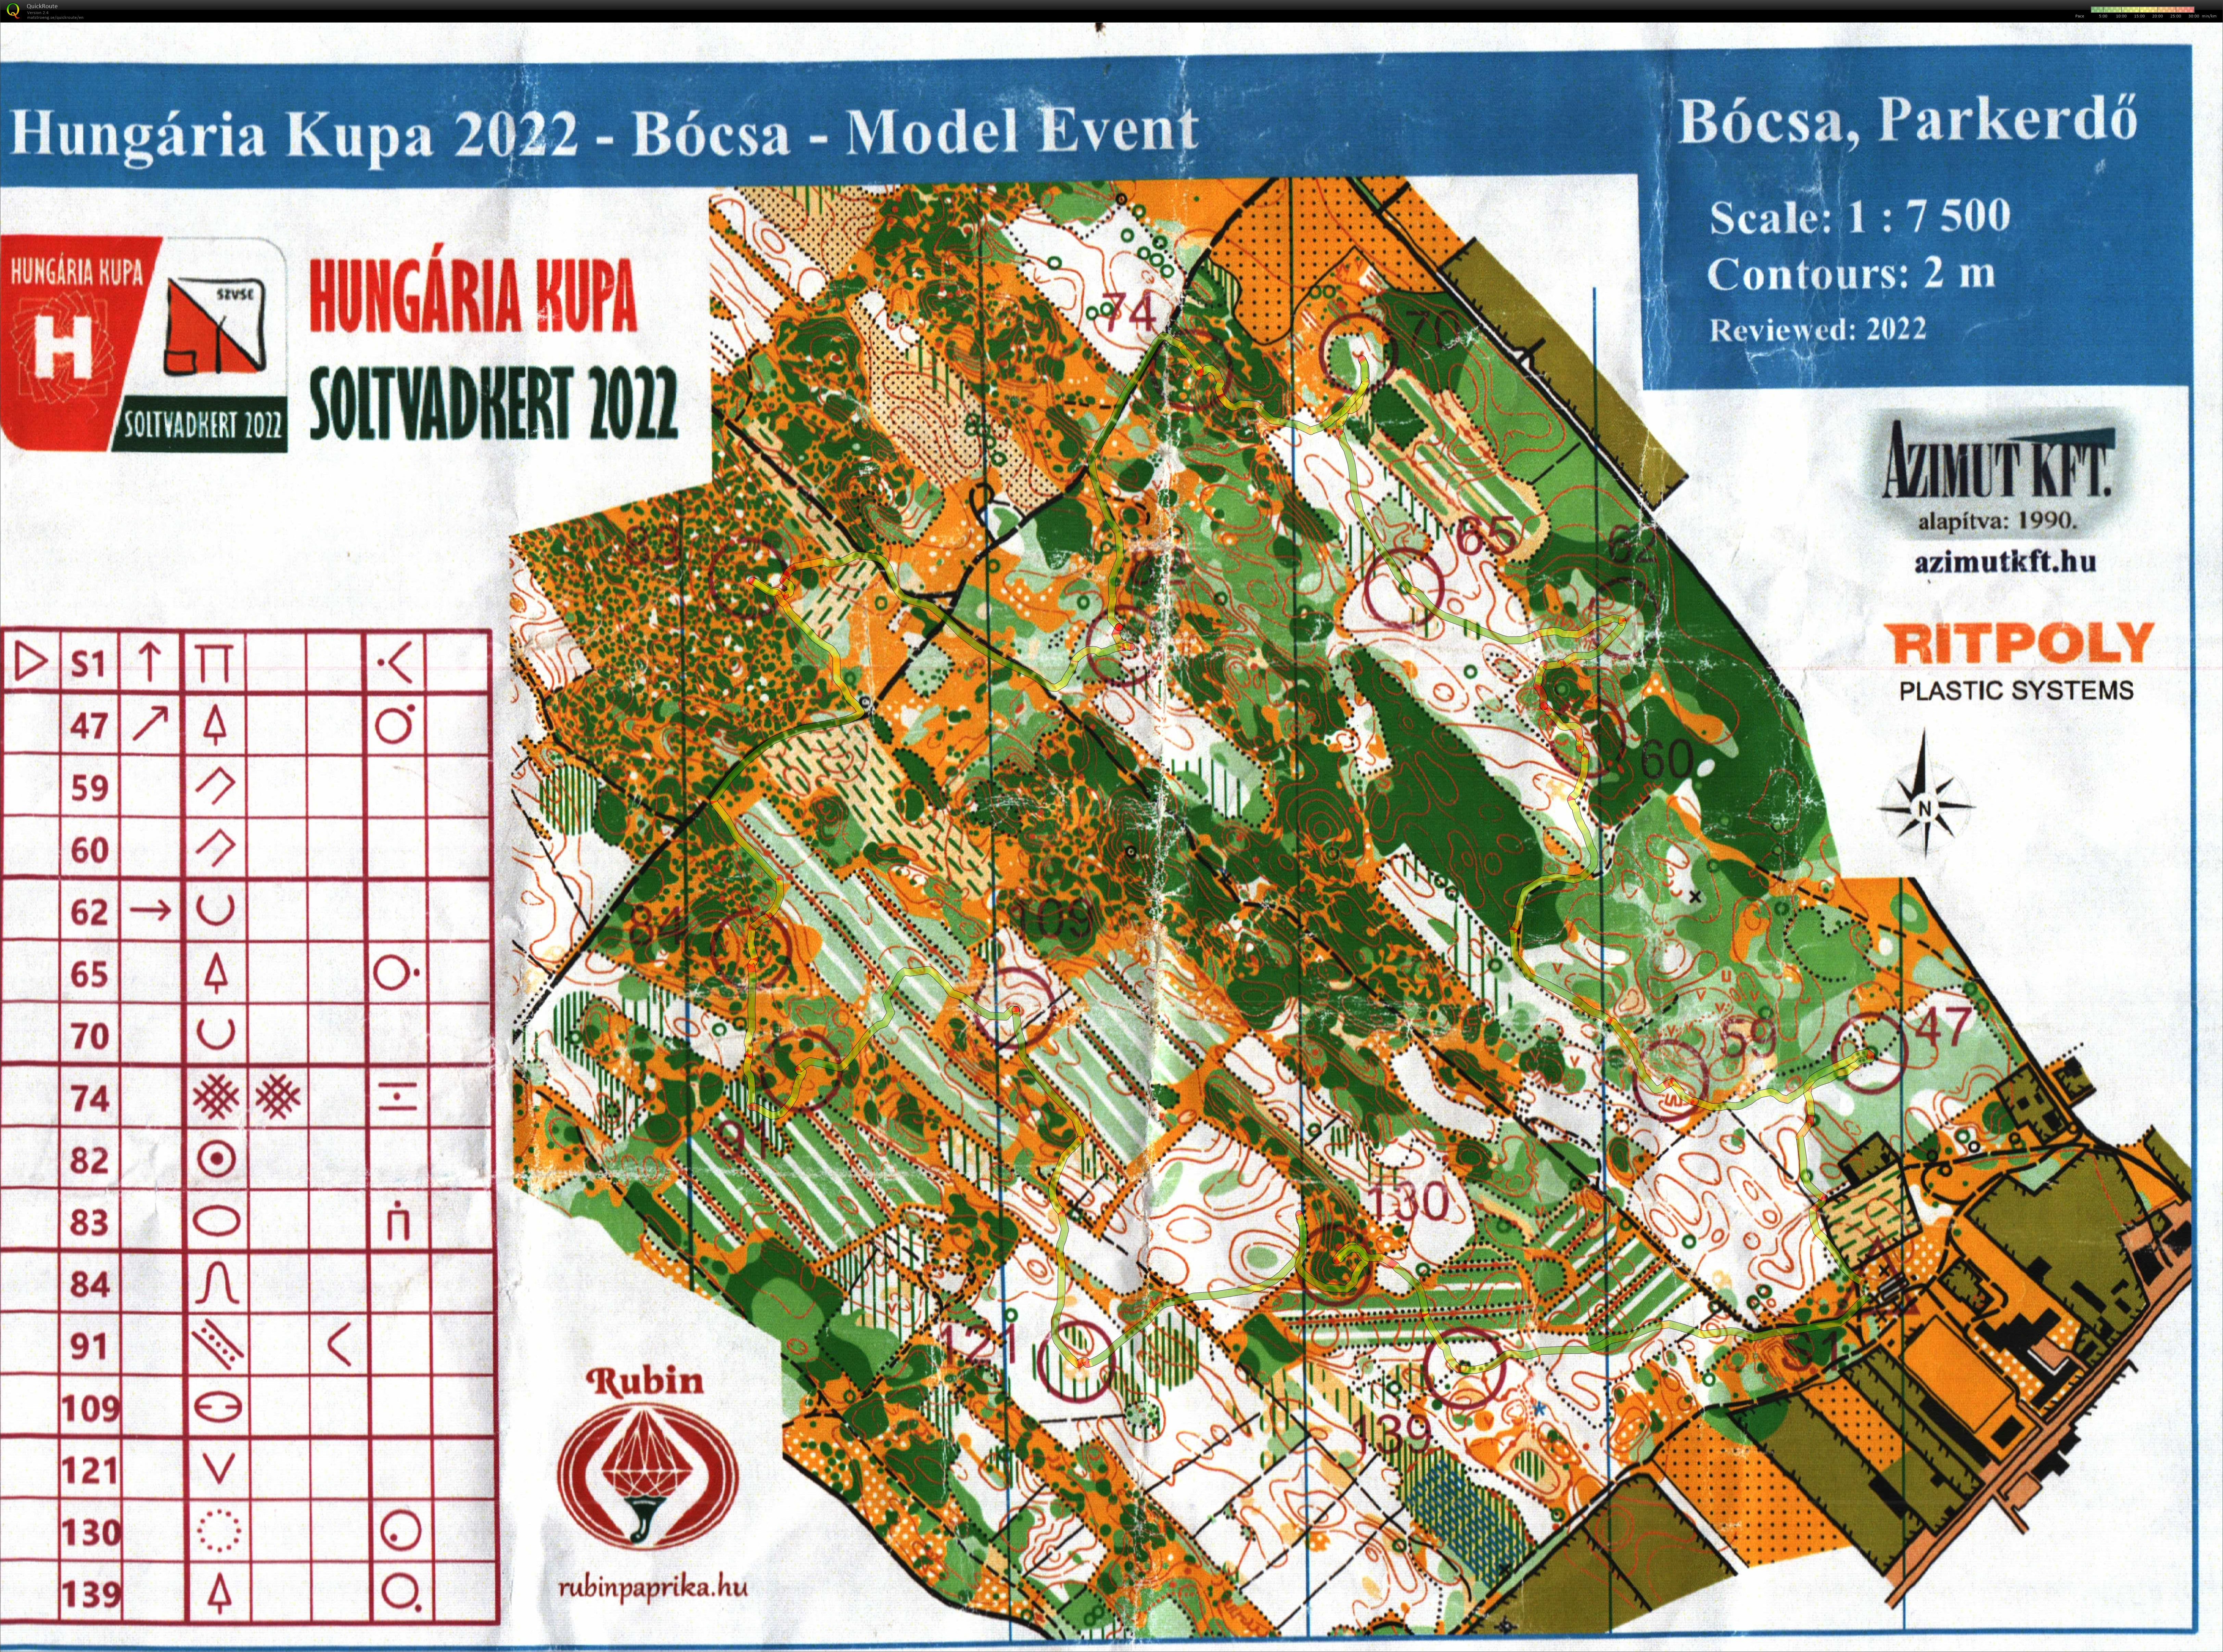 Hungaria Kupa Model Event (09-08-2022)